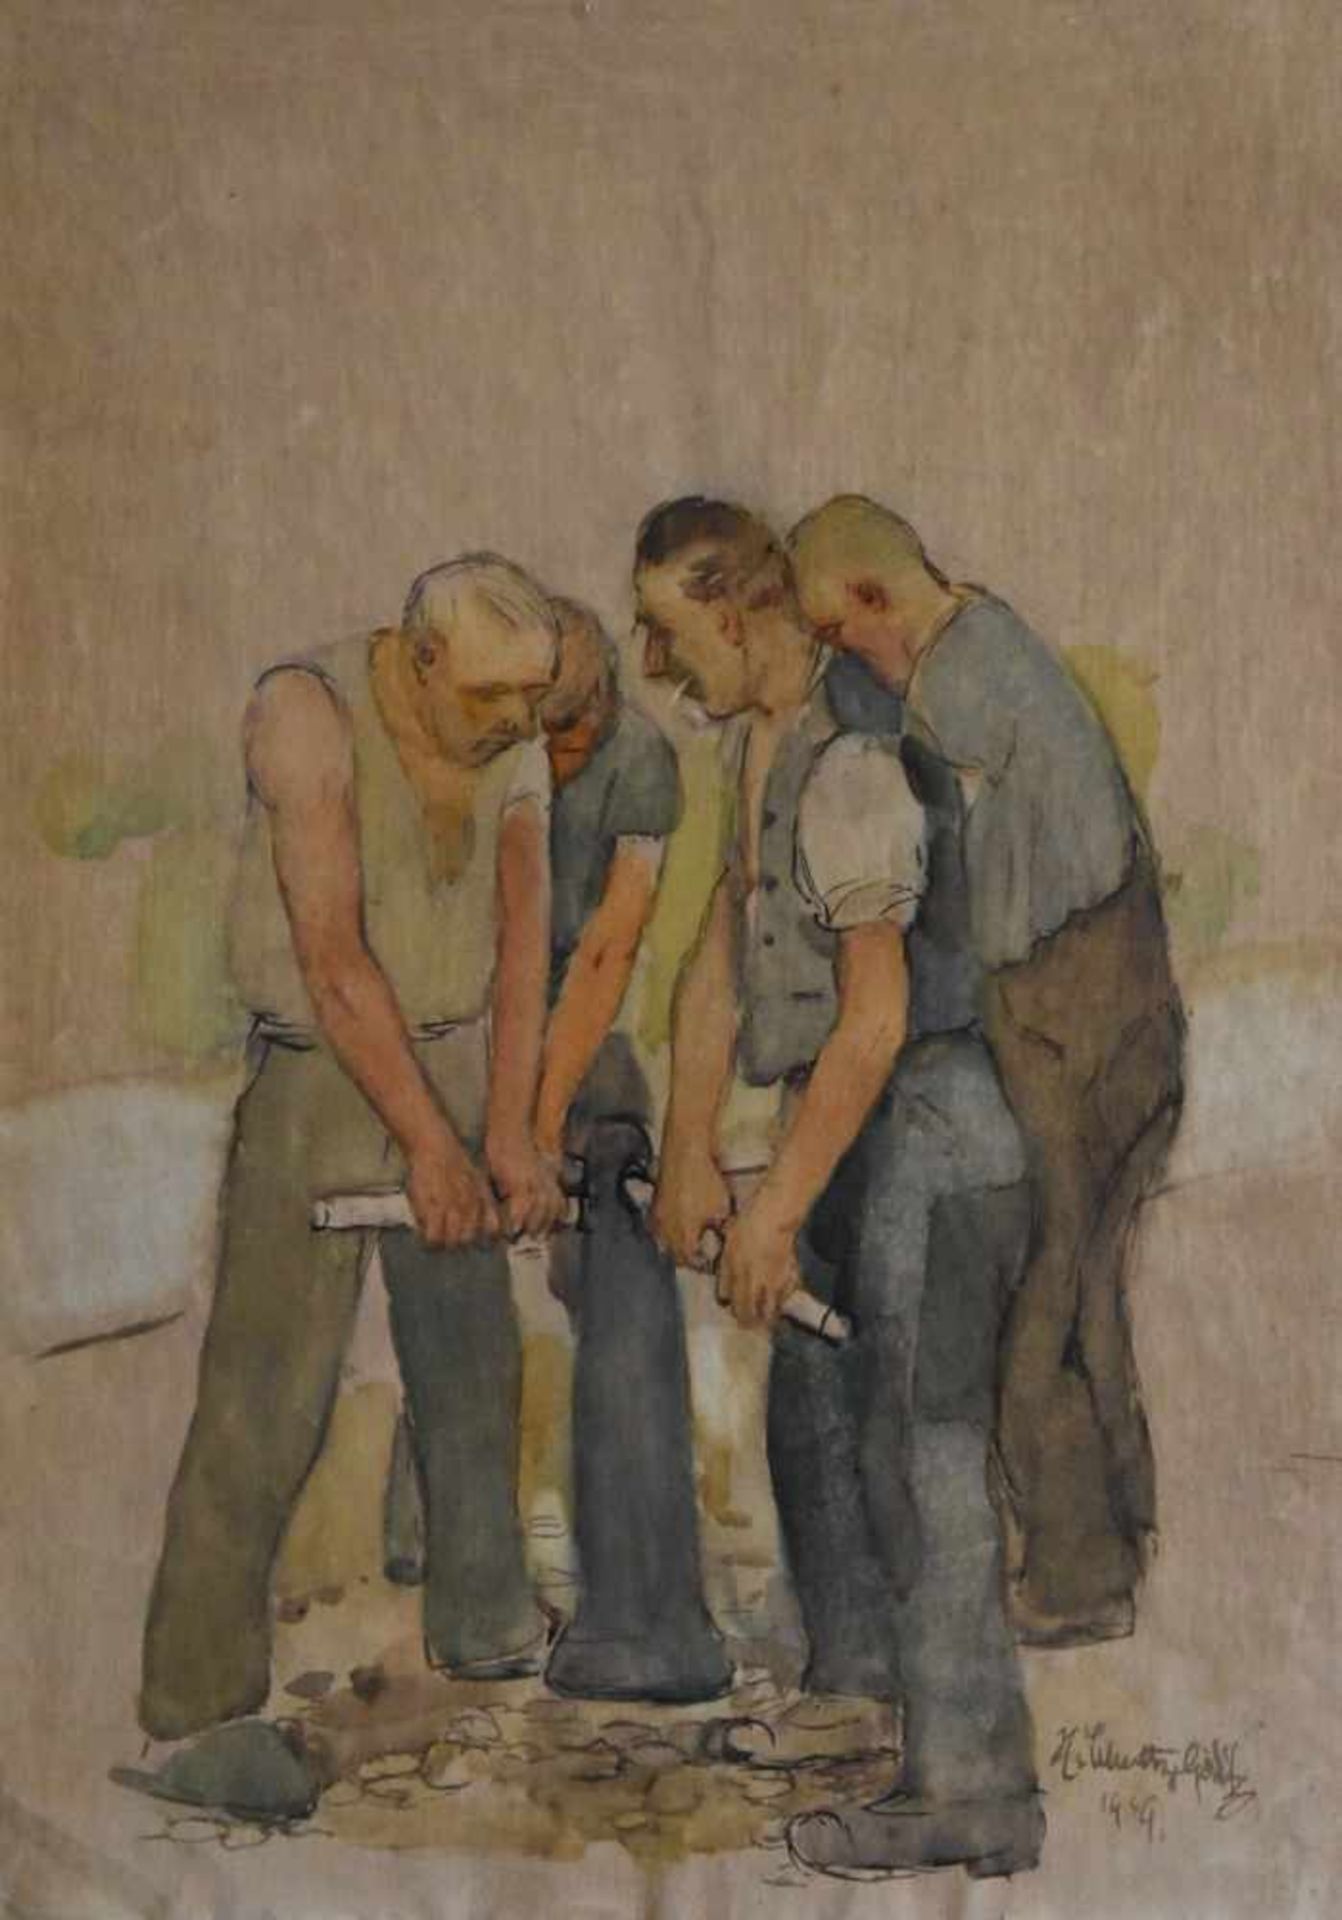 Schulze - Görlitz, Hans (1878 - 1952 Dresden), "Straßenarbeiter"